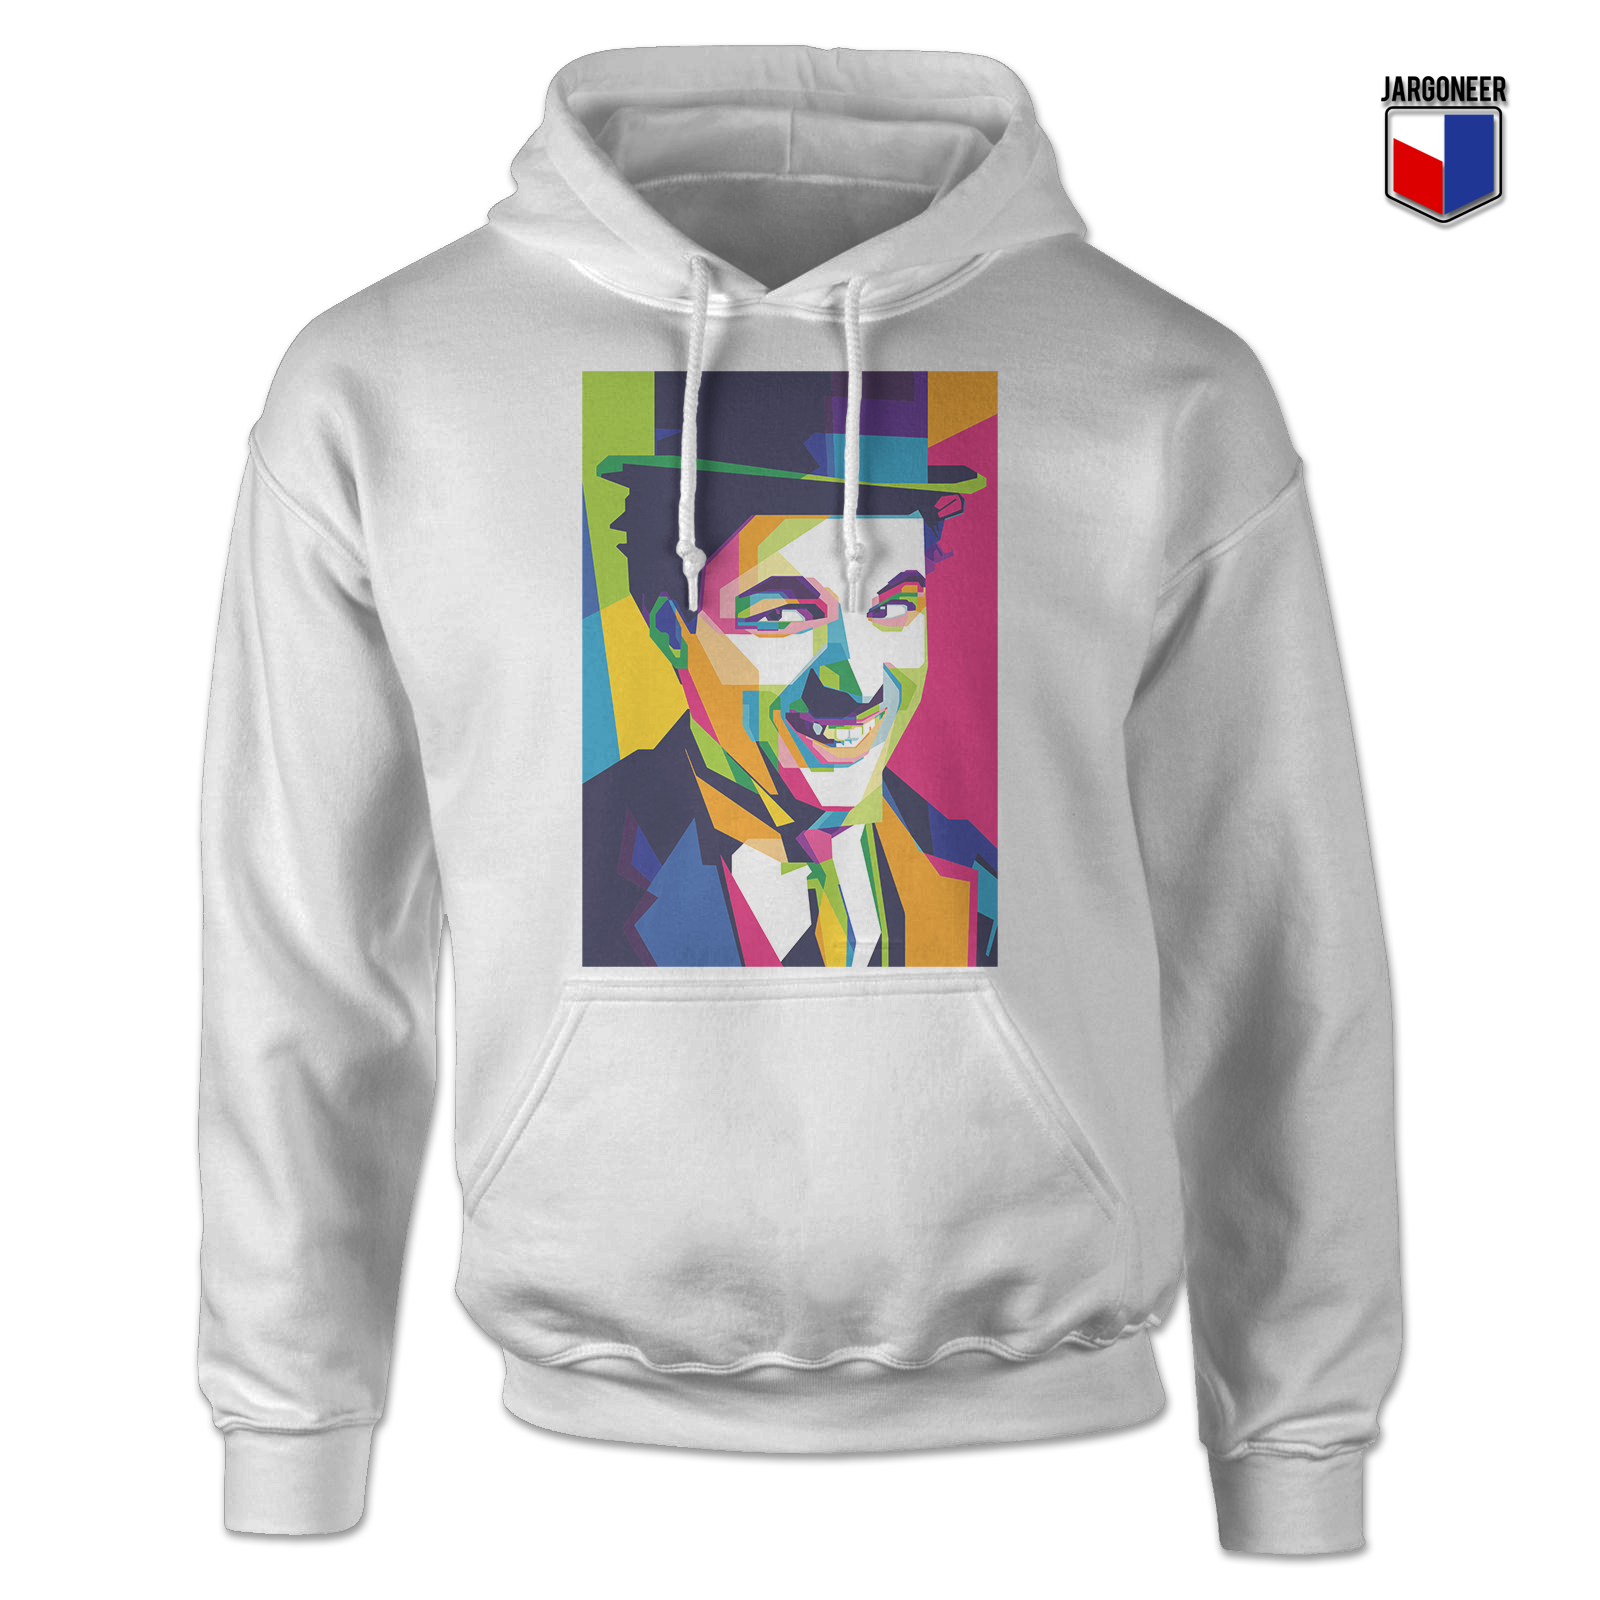 Colorful Chaplin White Hoody - Shop Unique Graphic Cool Shirt Designs